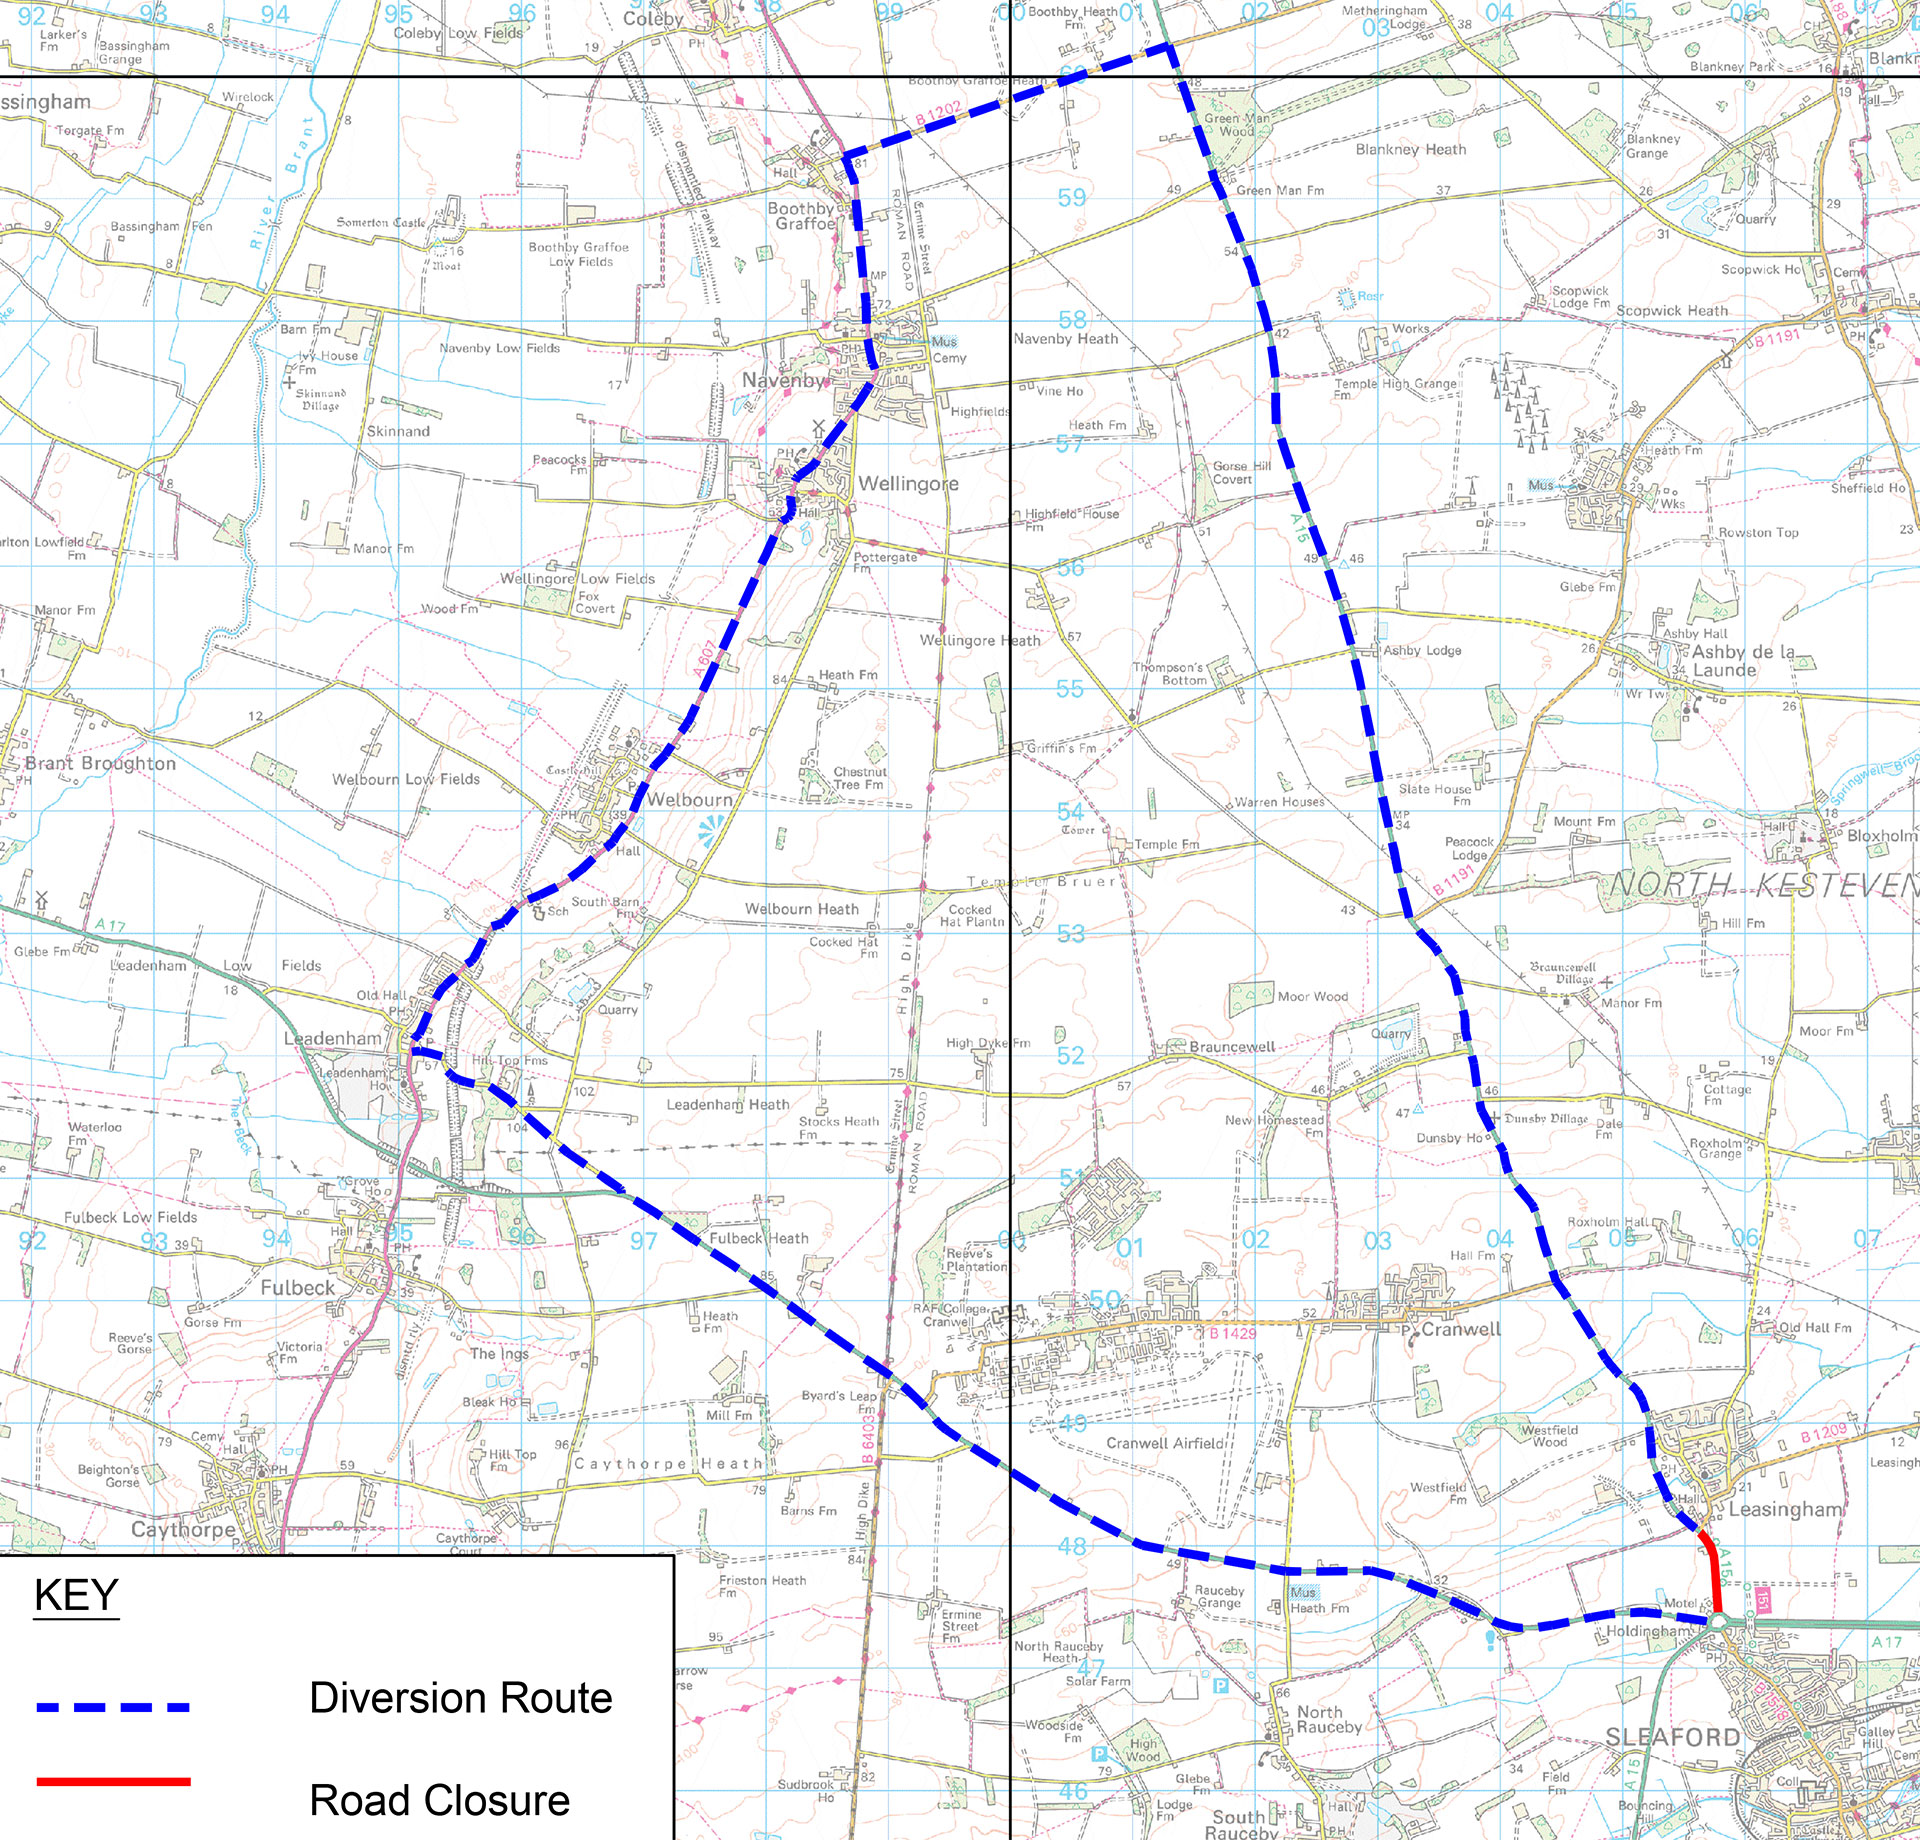 Diversion route A15 north